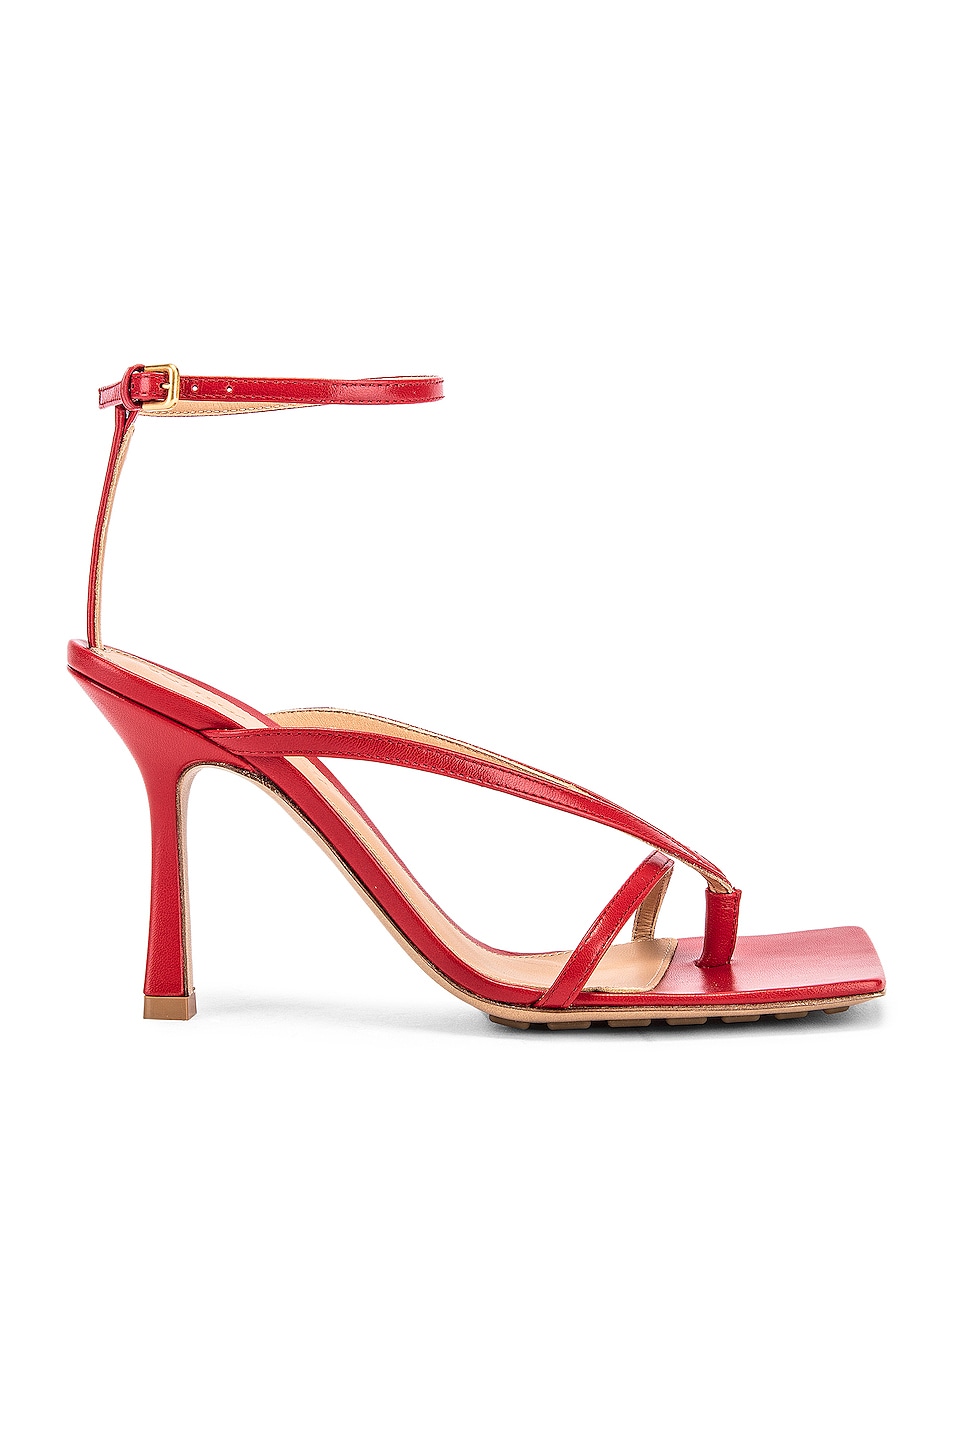 Bottega Veneta Leather Stretch Toe Heels in Bright Red | FWRD